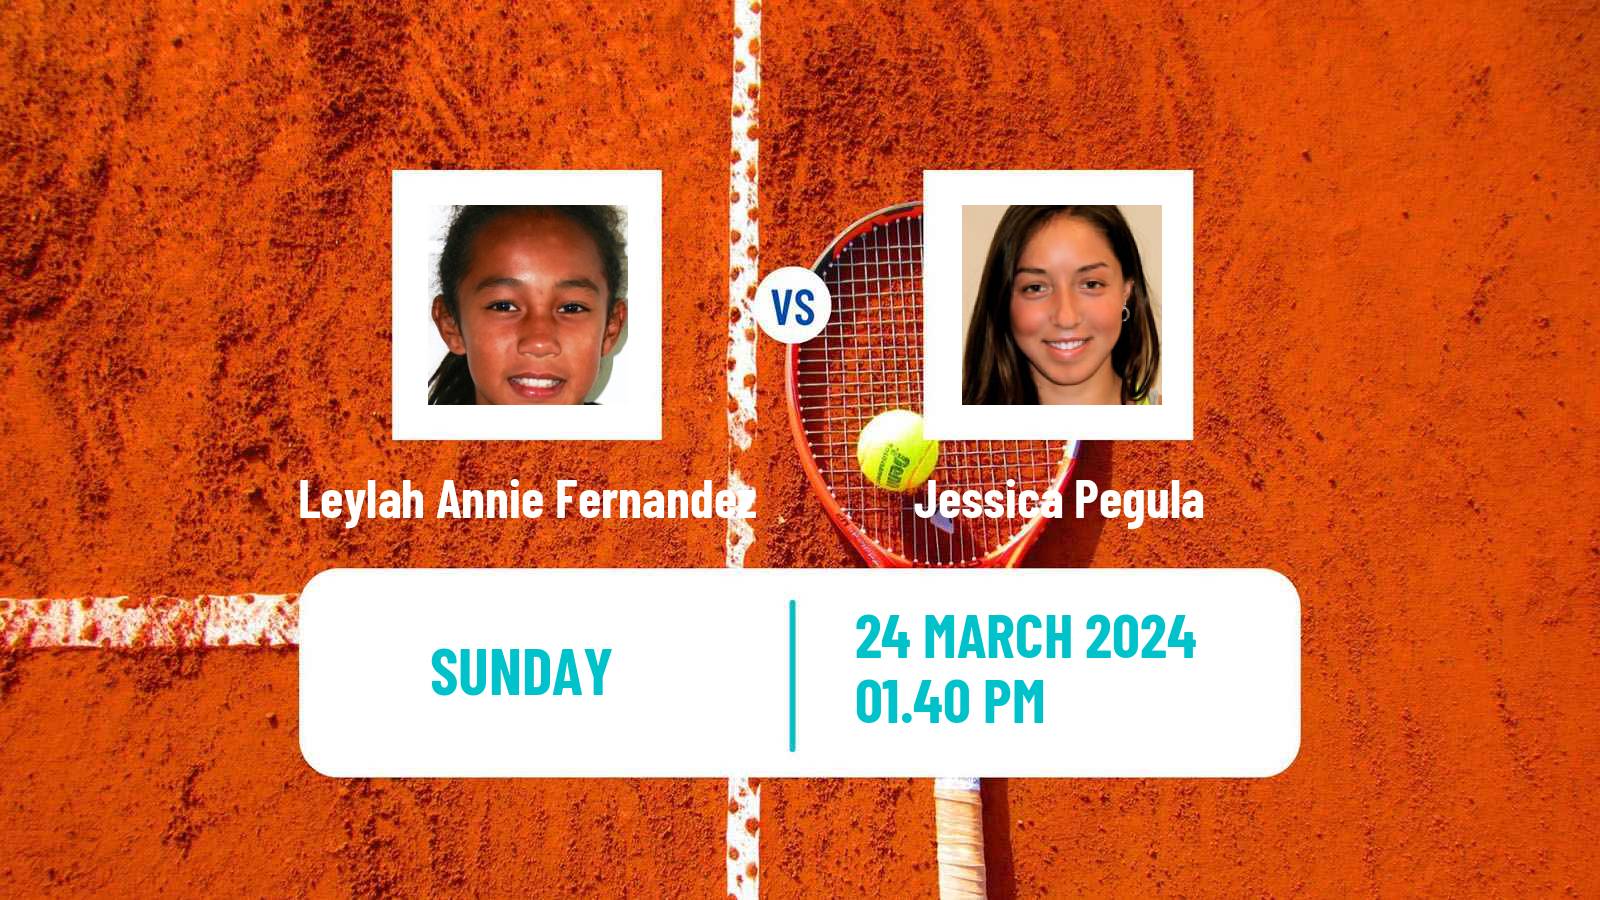 Tennis WTA Miami Leylah Annie Fernandez - Jessica Pegula